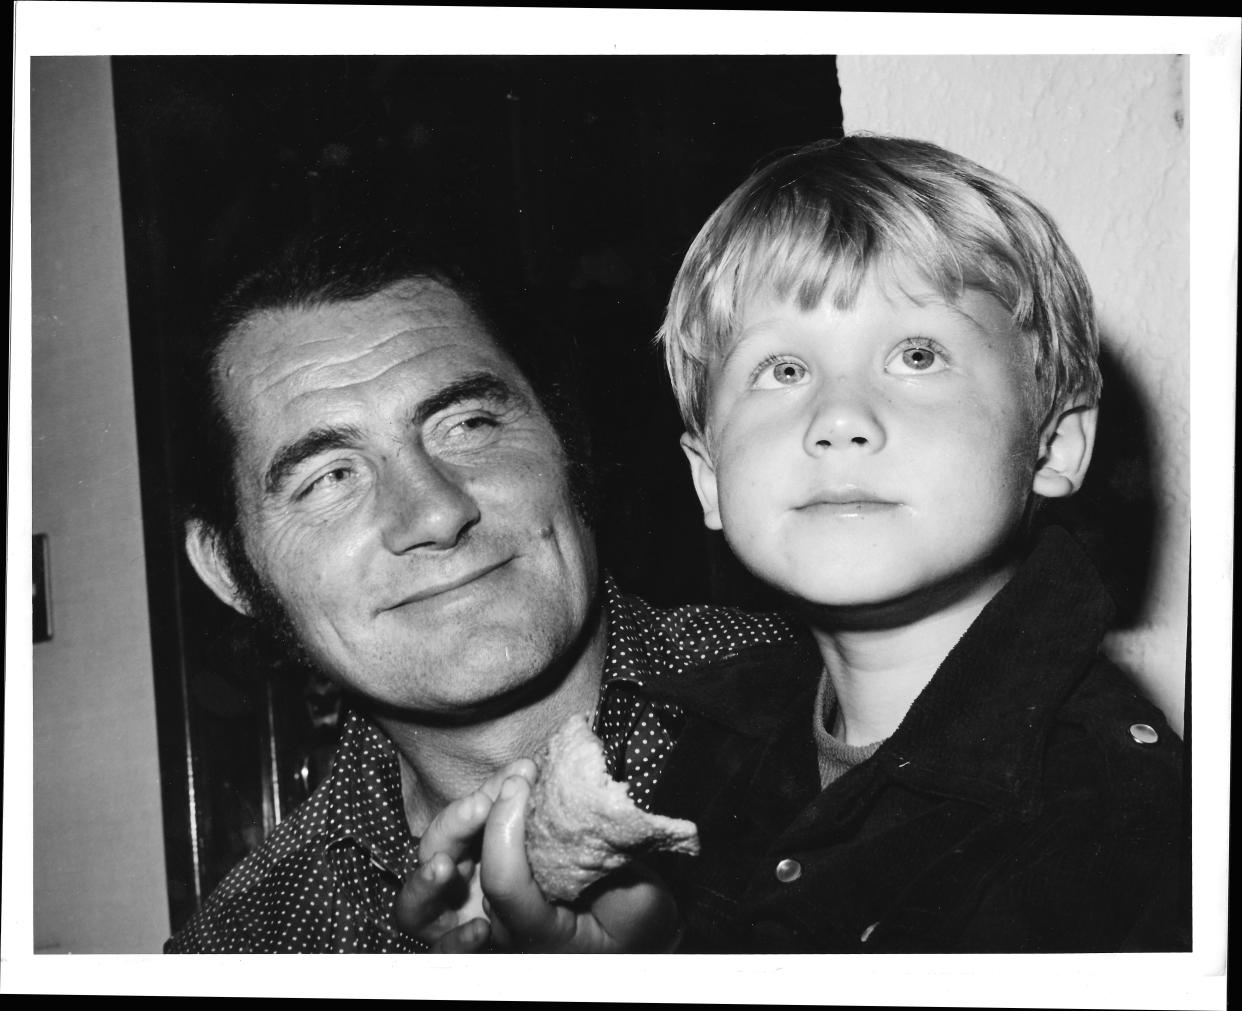 "Jaws" actor Robert Shaw and his son, Ian Shaw.